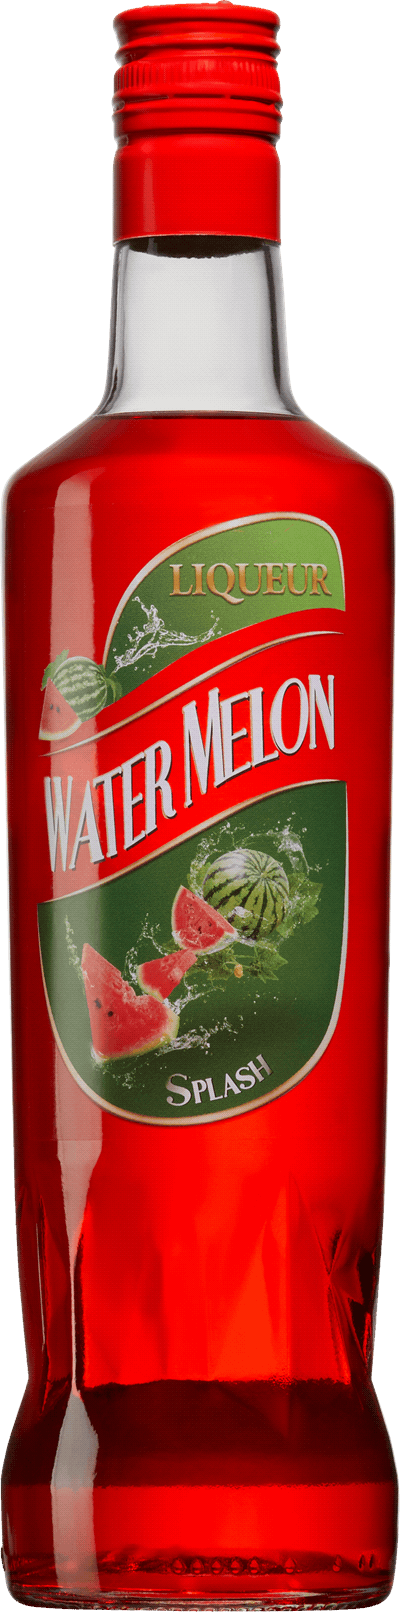 Watermelon splash 